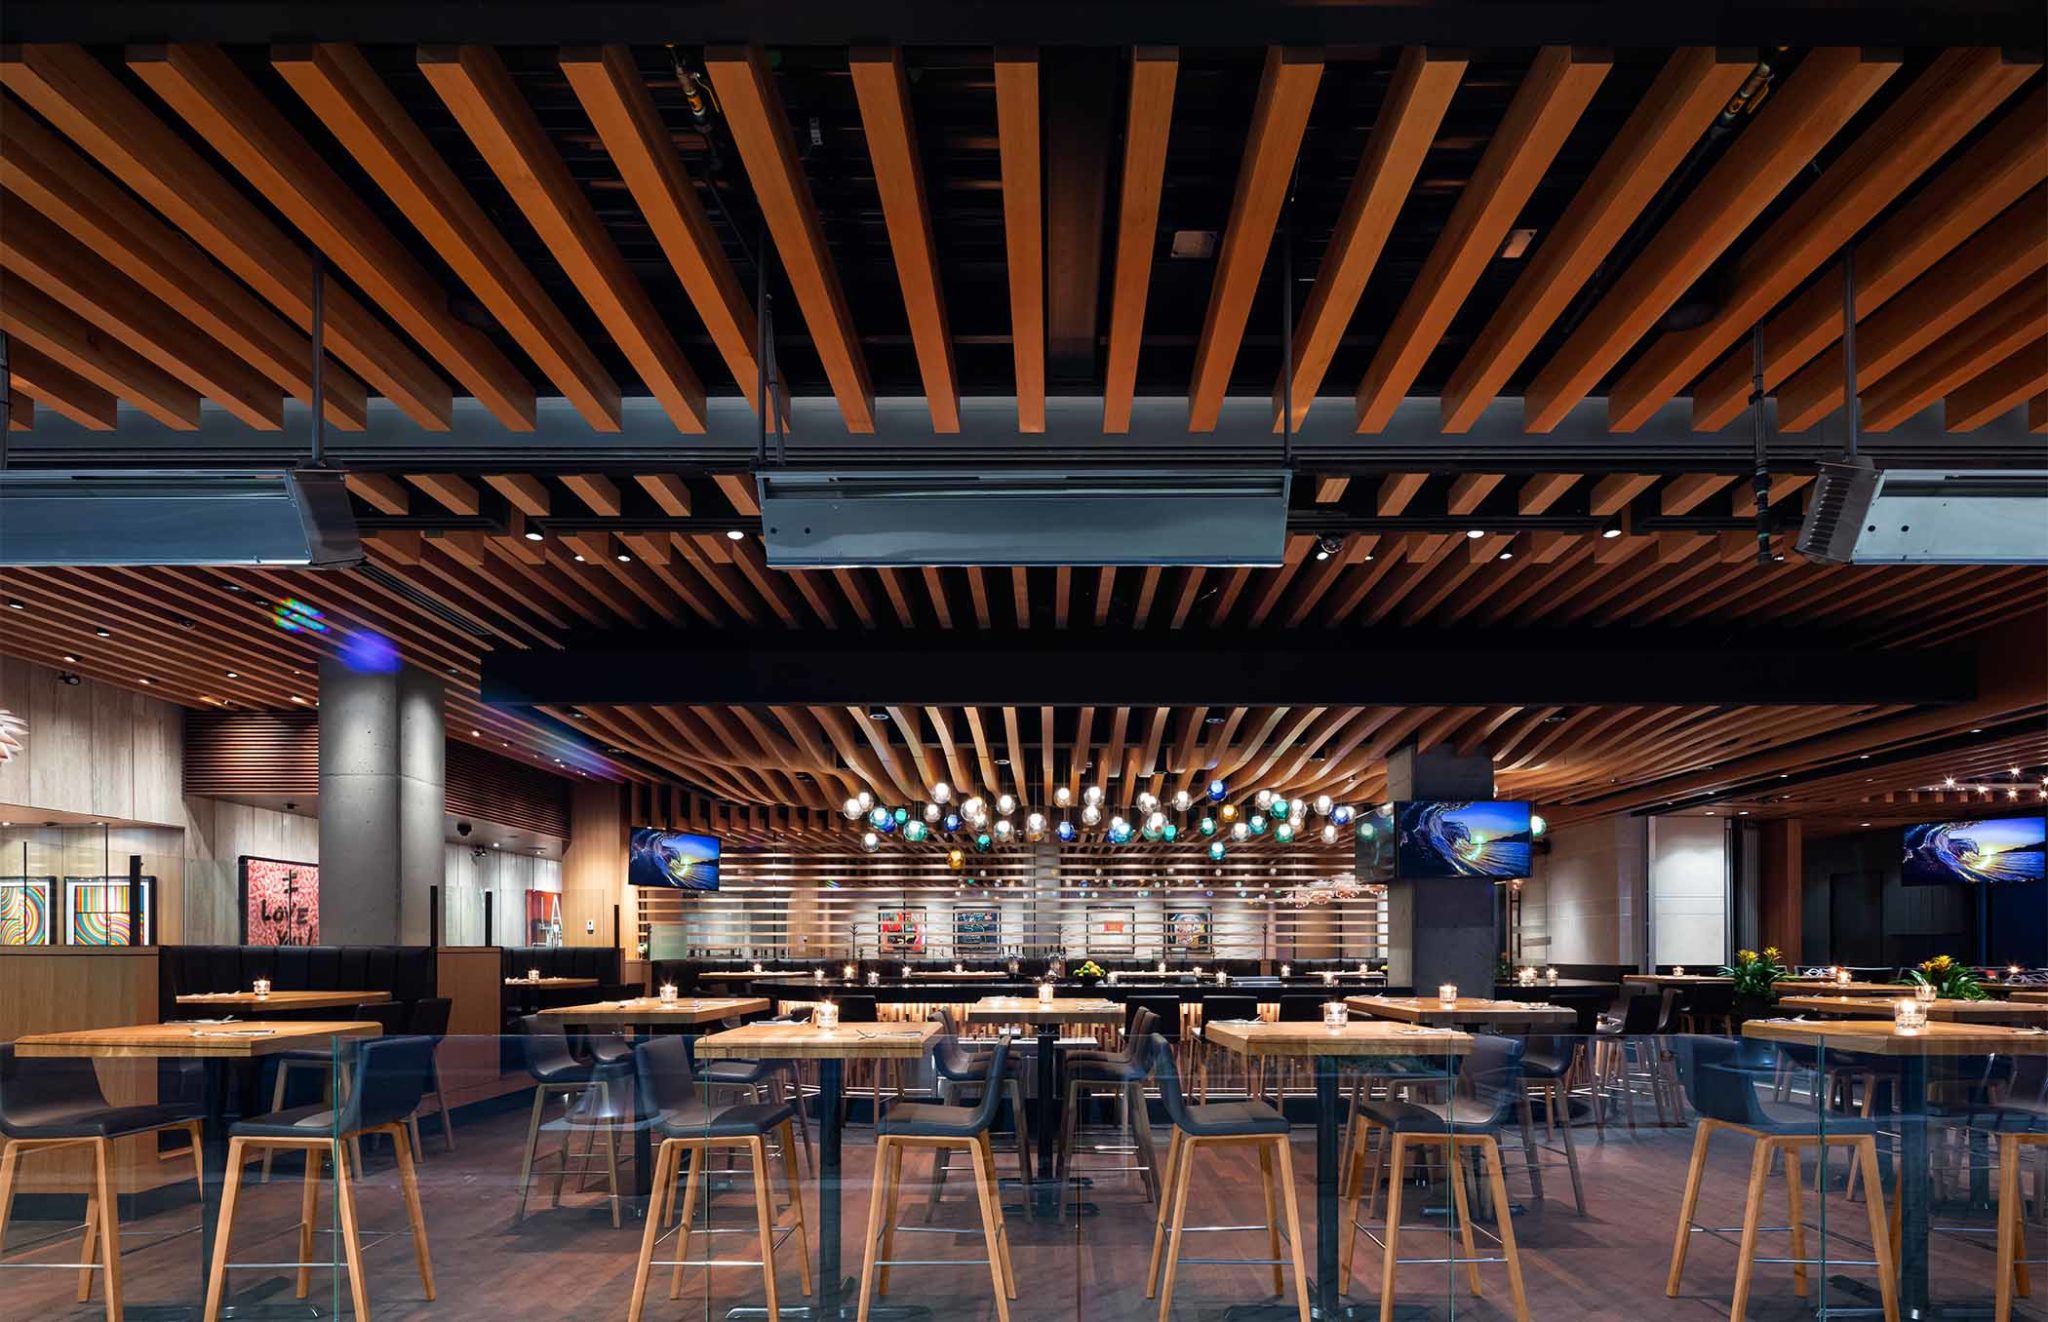 Assembledge, Architecture, Hospitality, Restaurant Design, Cactus Club Cafe, Los Angeles